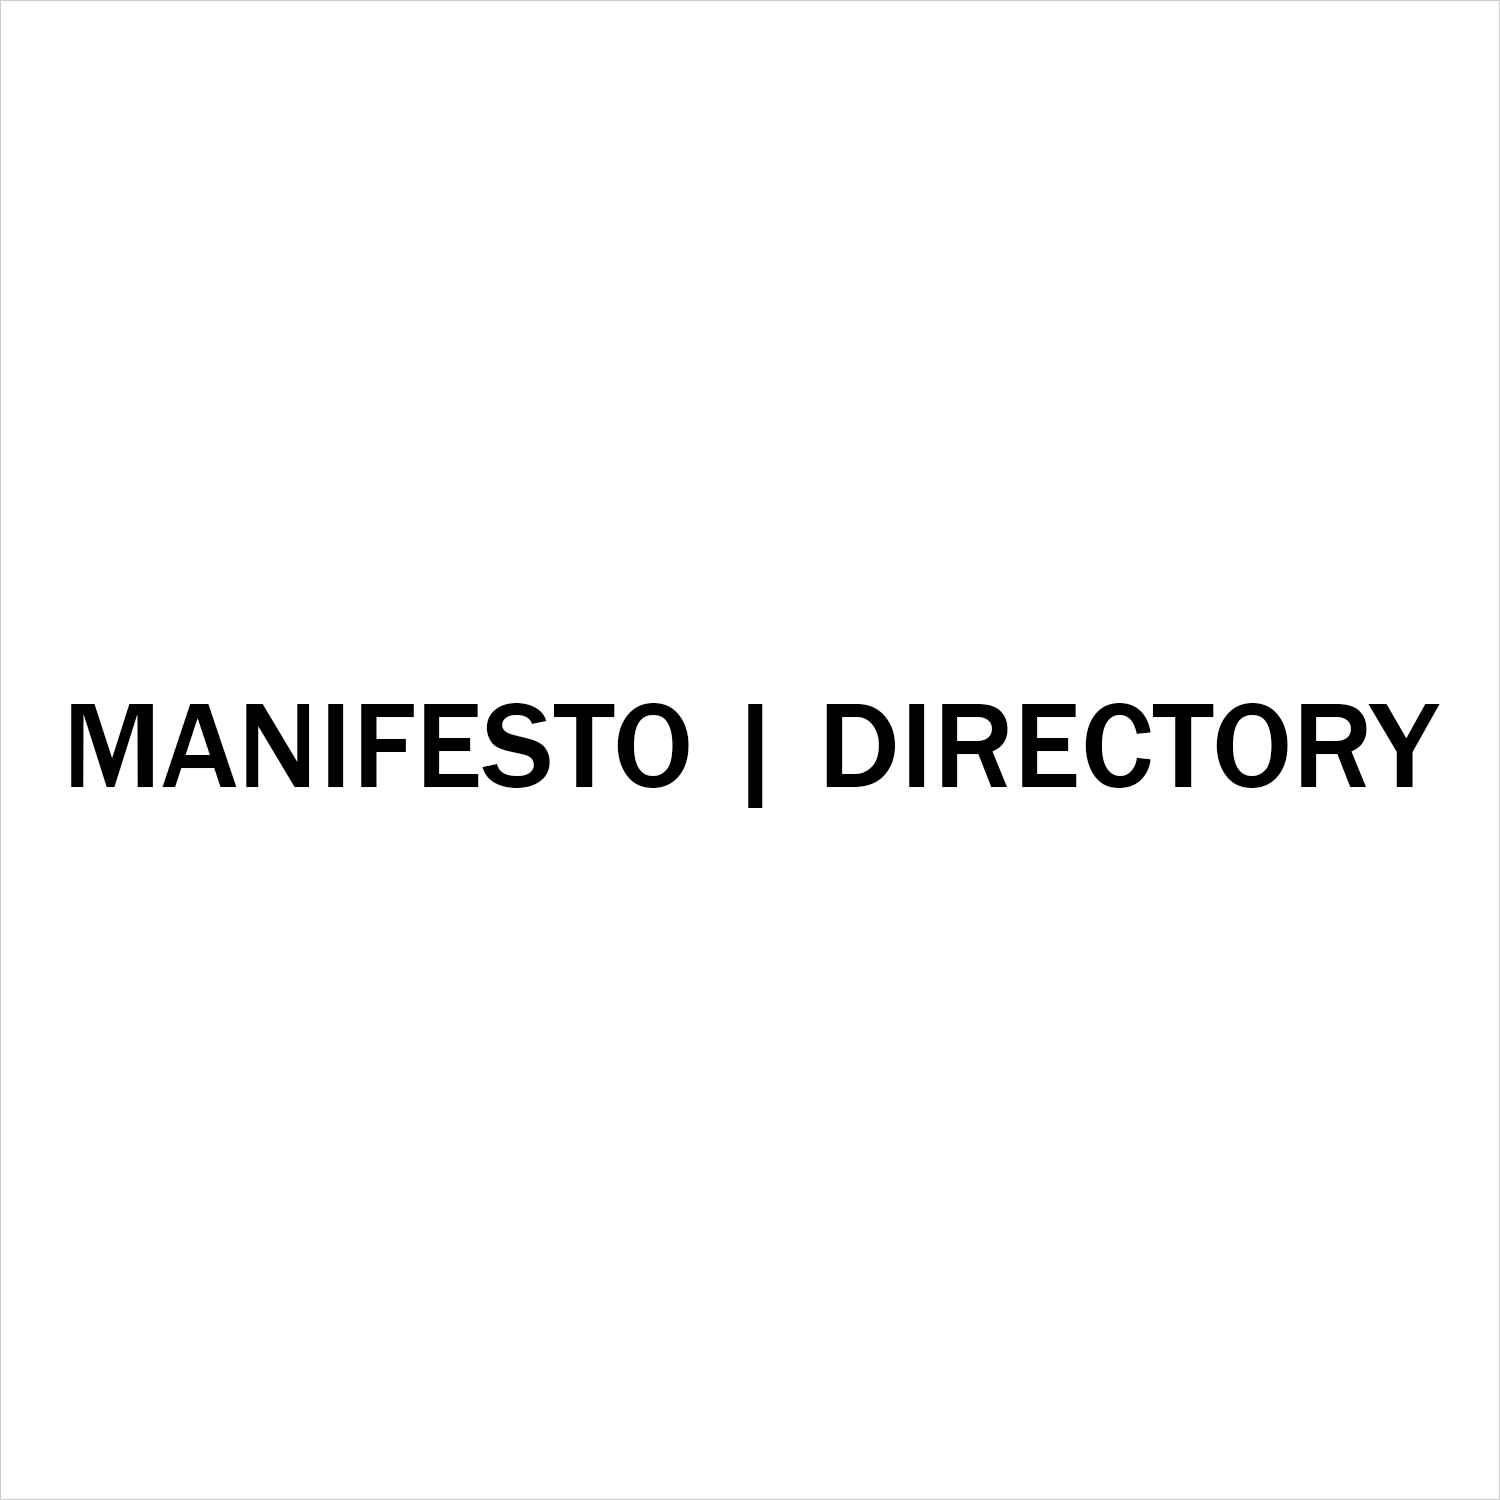 MANIFESTO | DIRECTORY